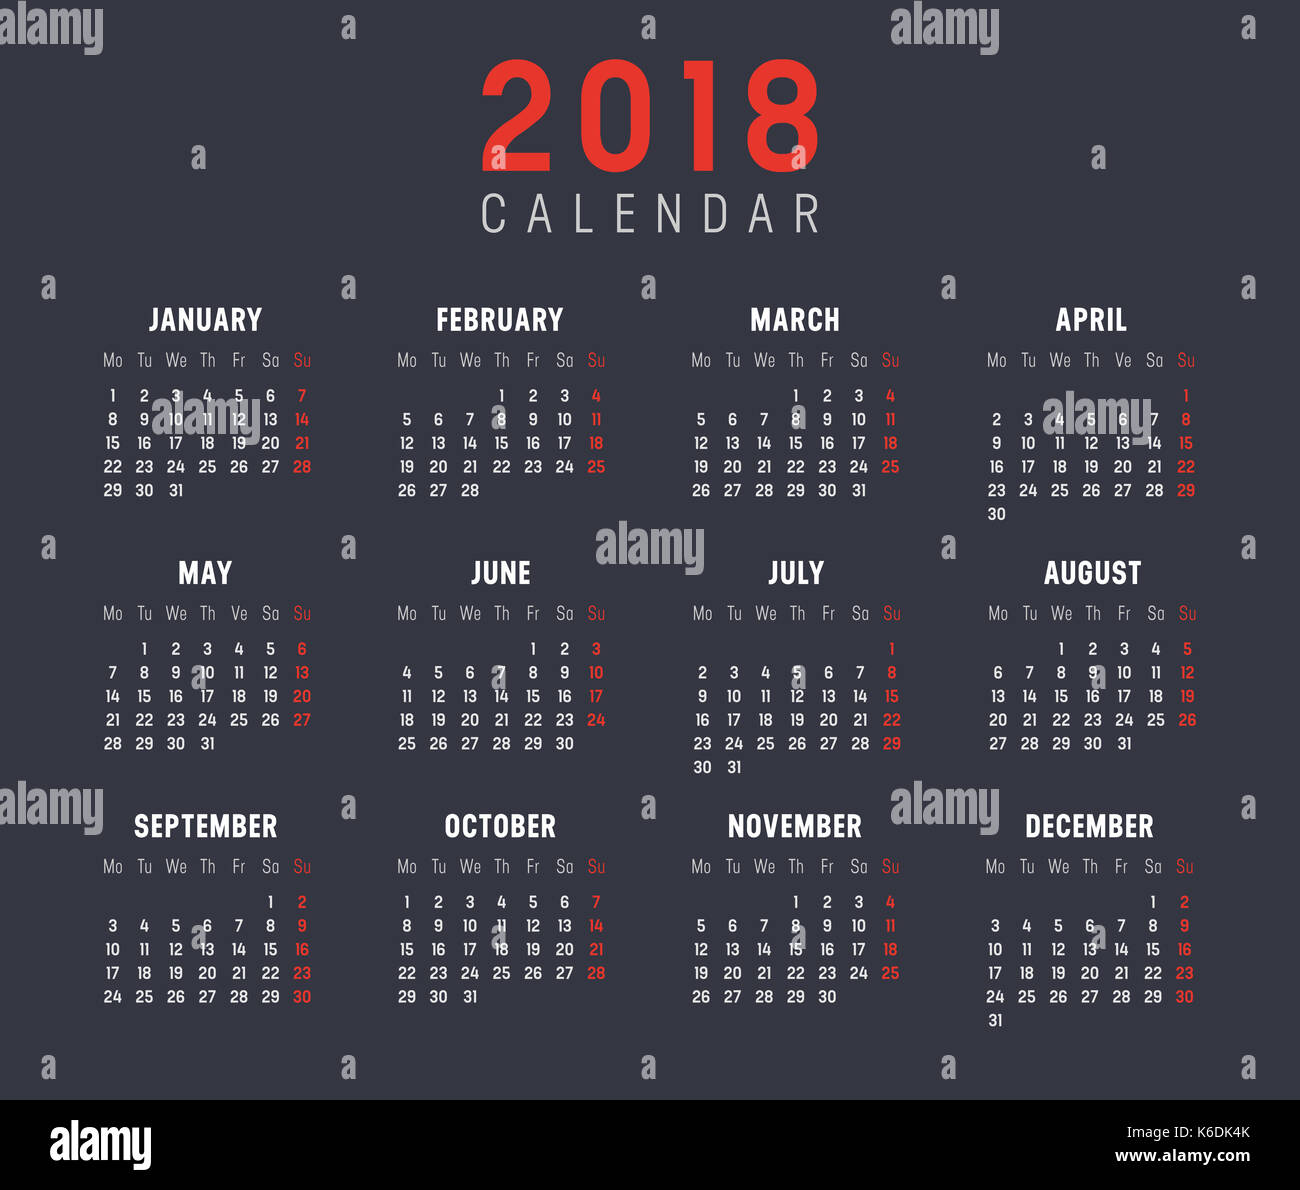 Year 2018 minimalist calendar, on black background. Stock Photo